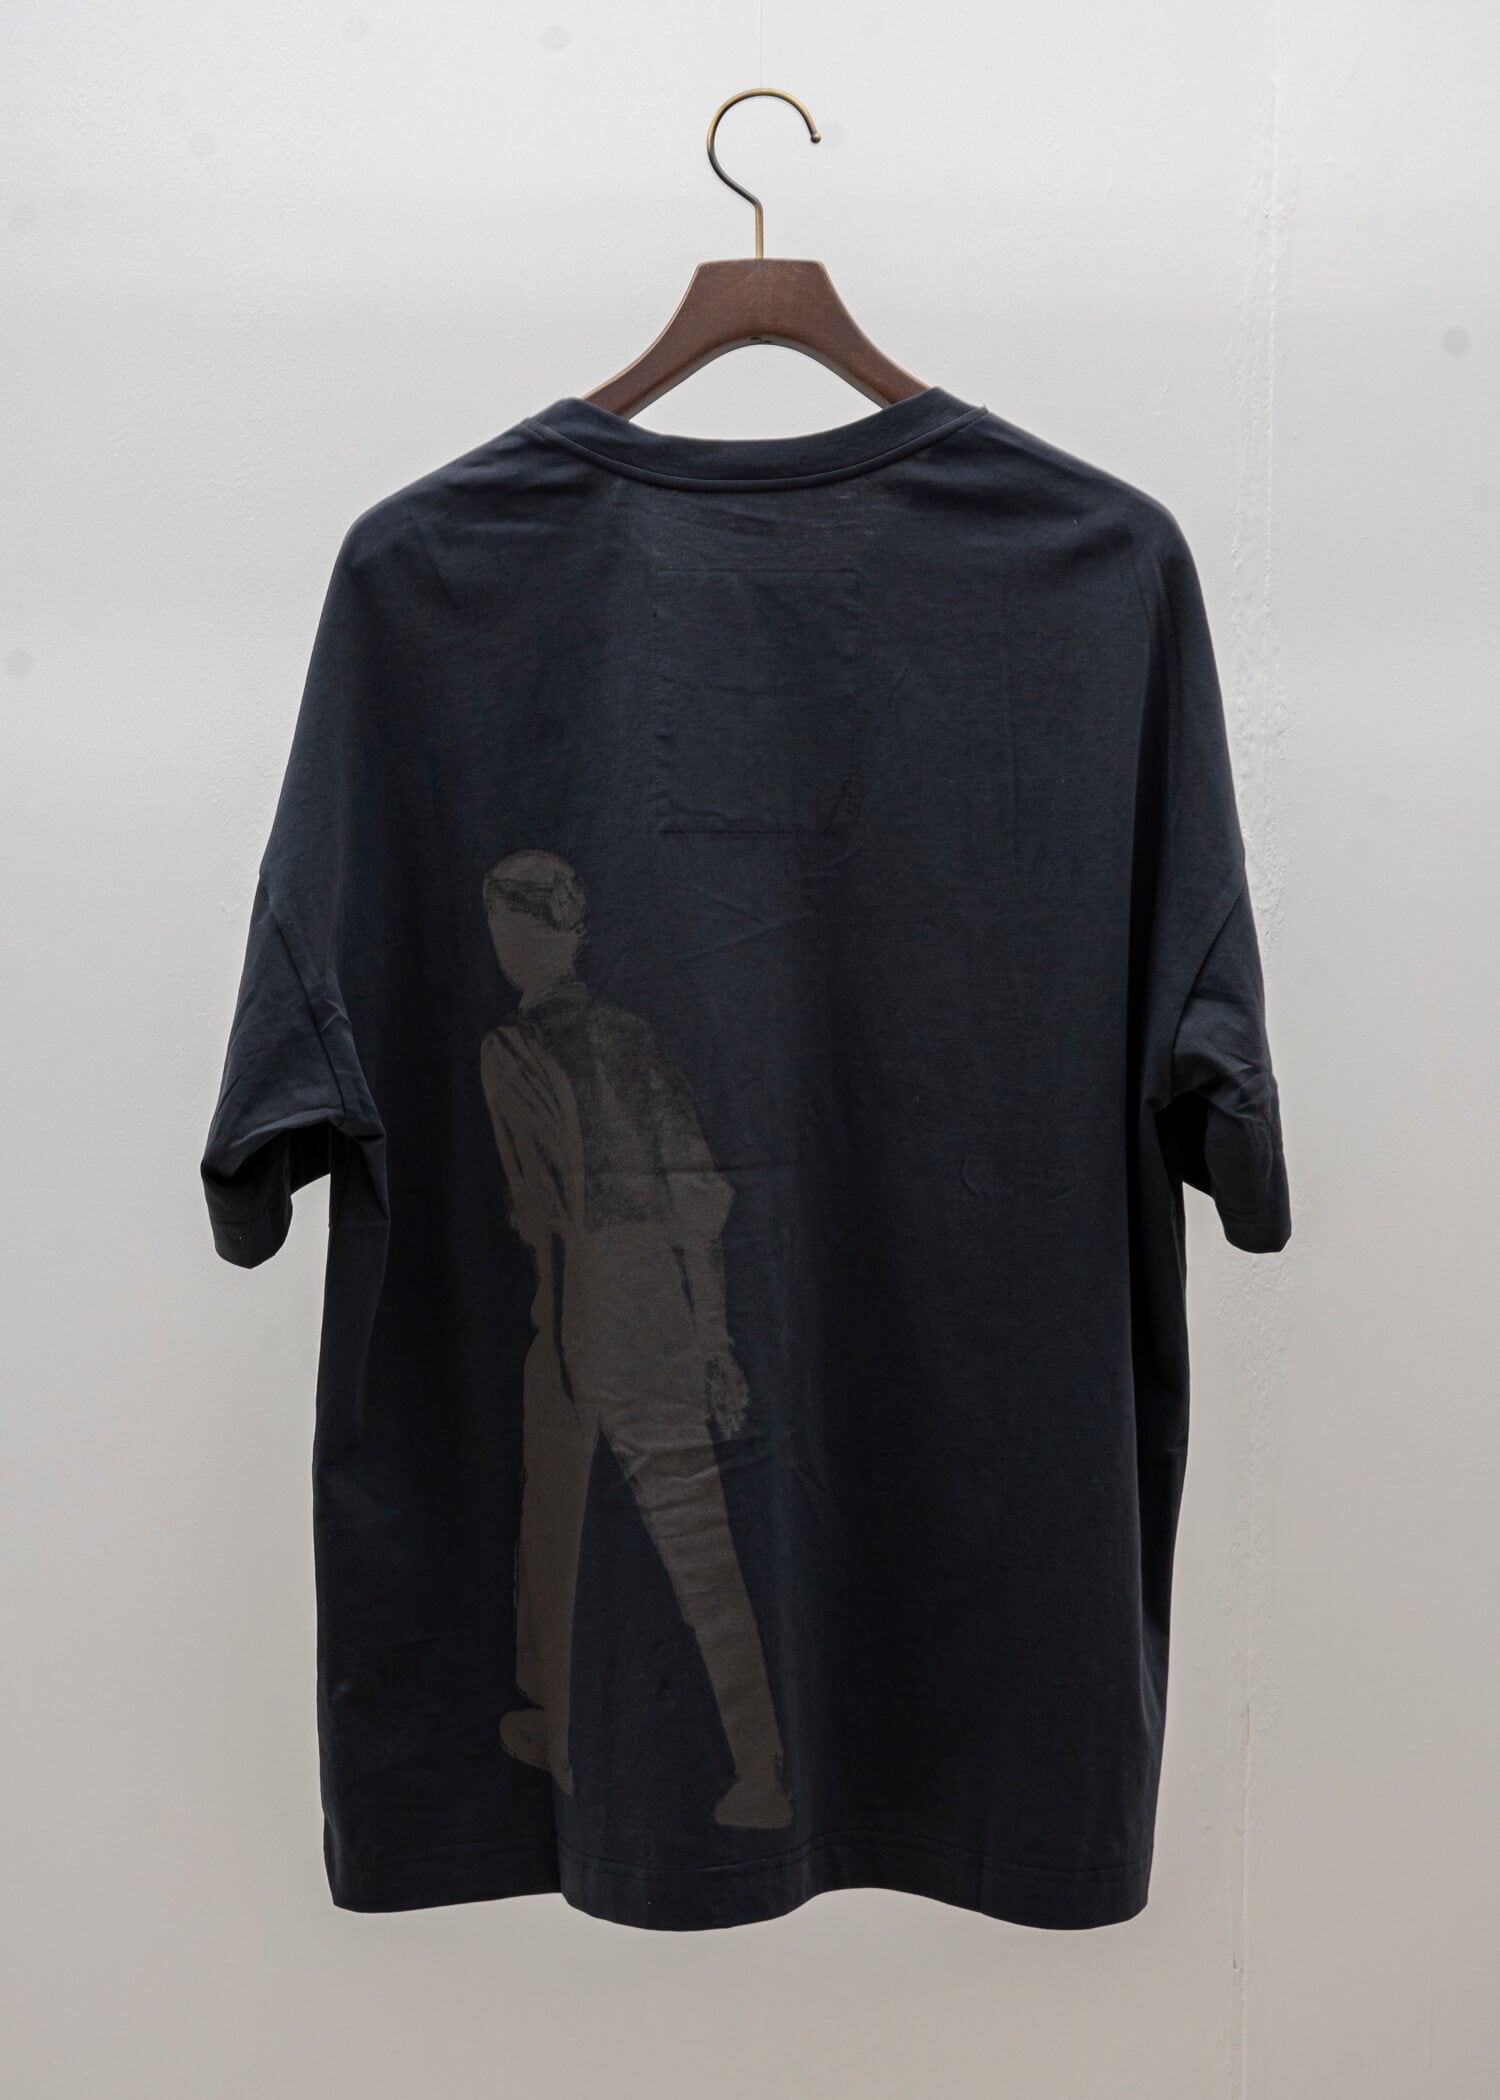 ZIGGY CHEN / T 恤 Art.#203